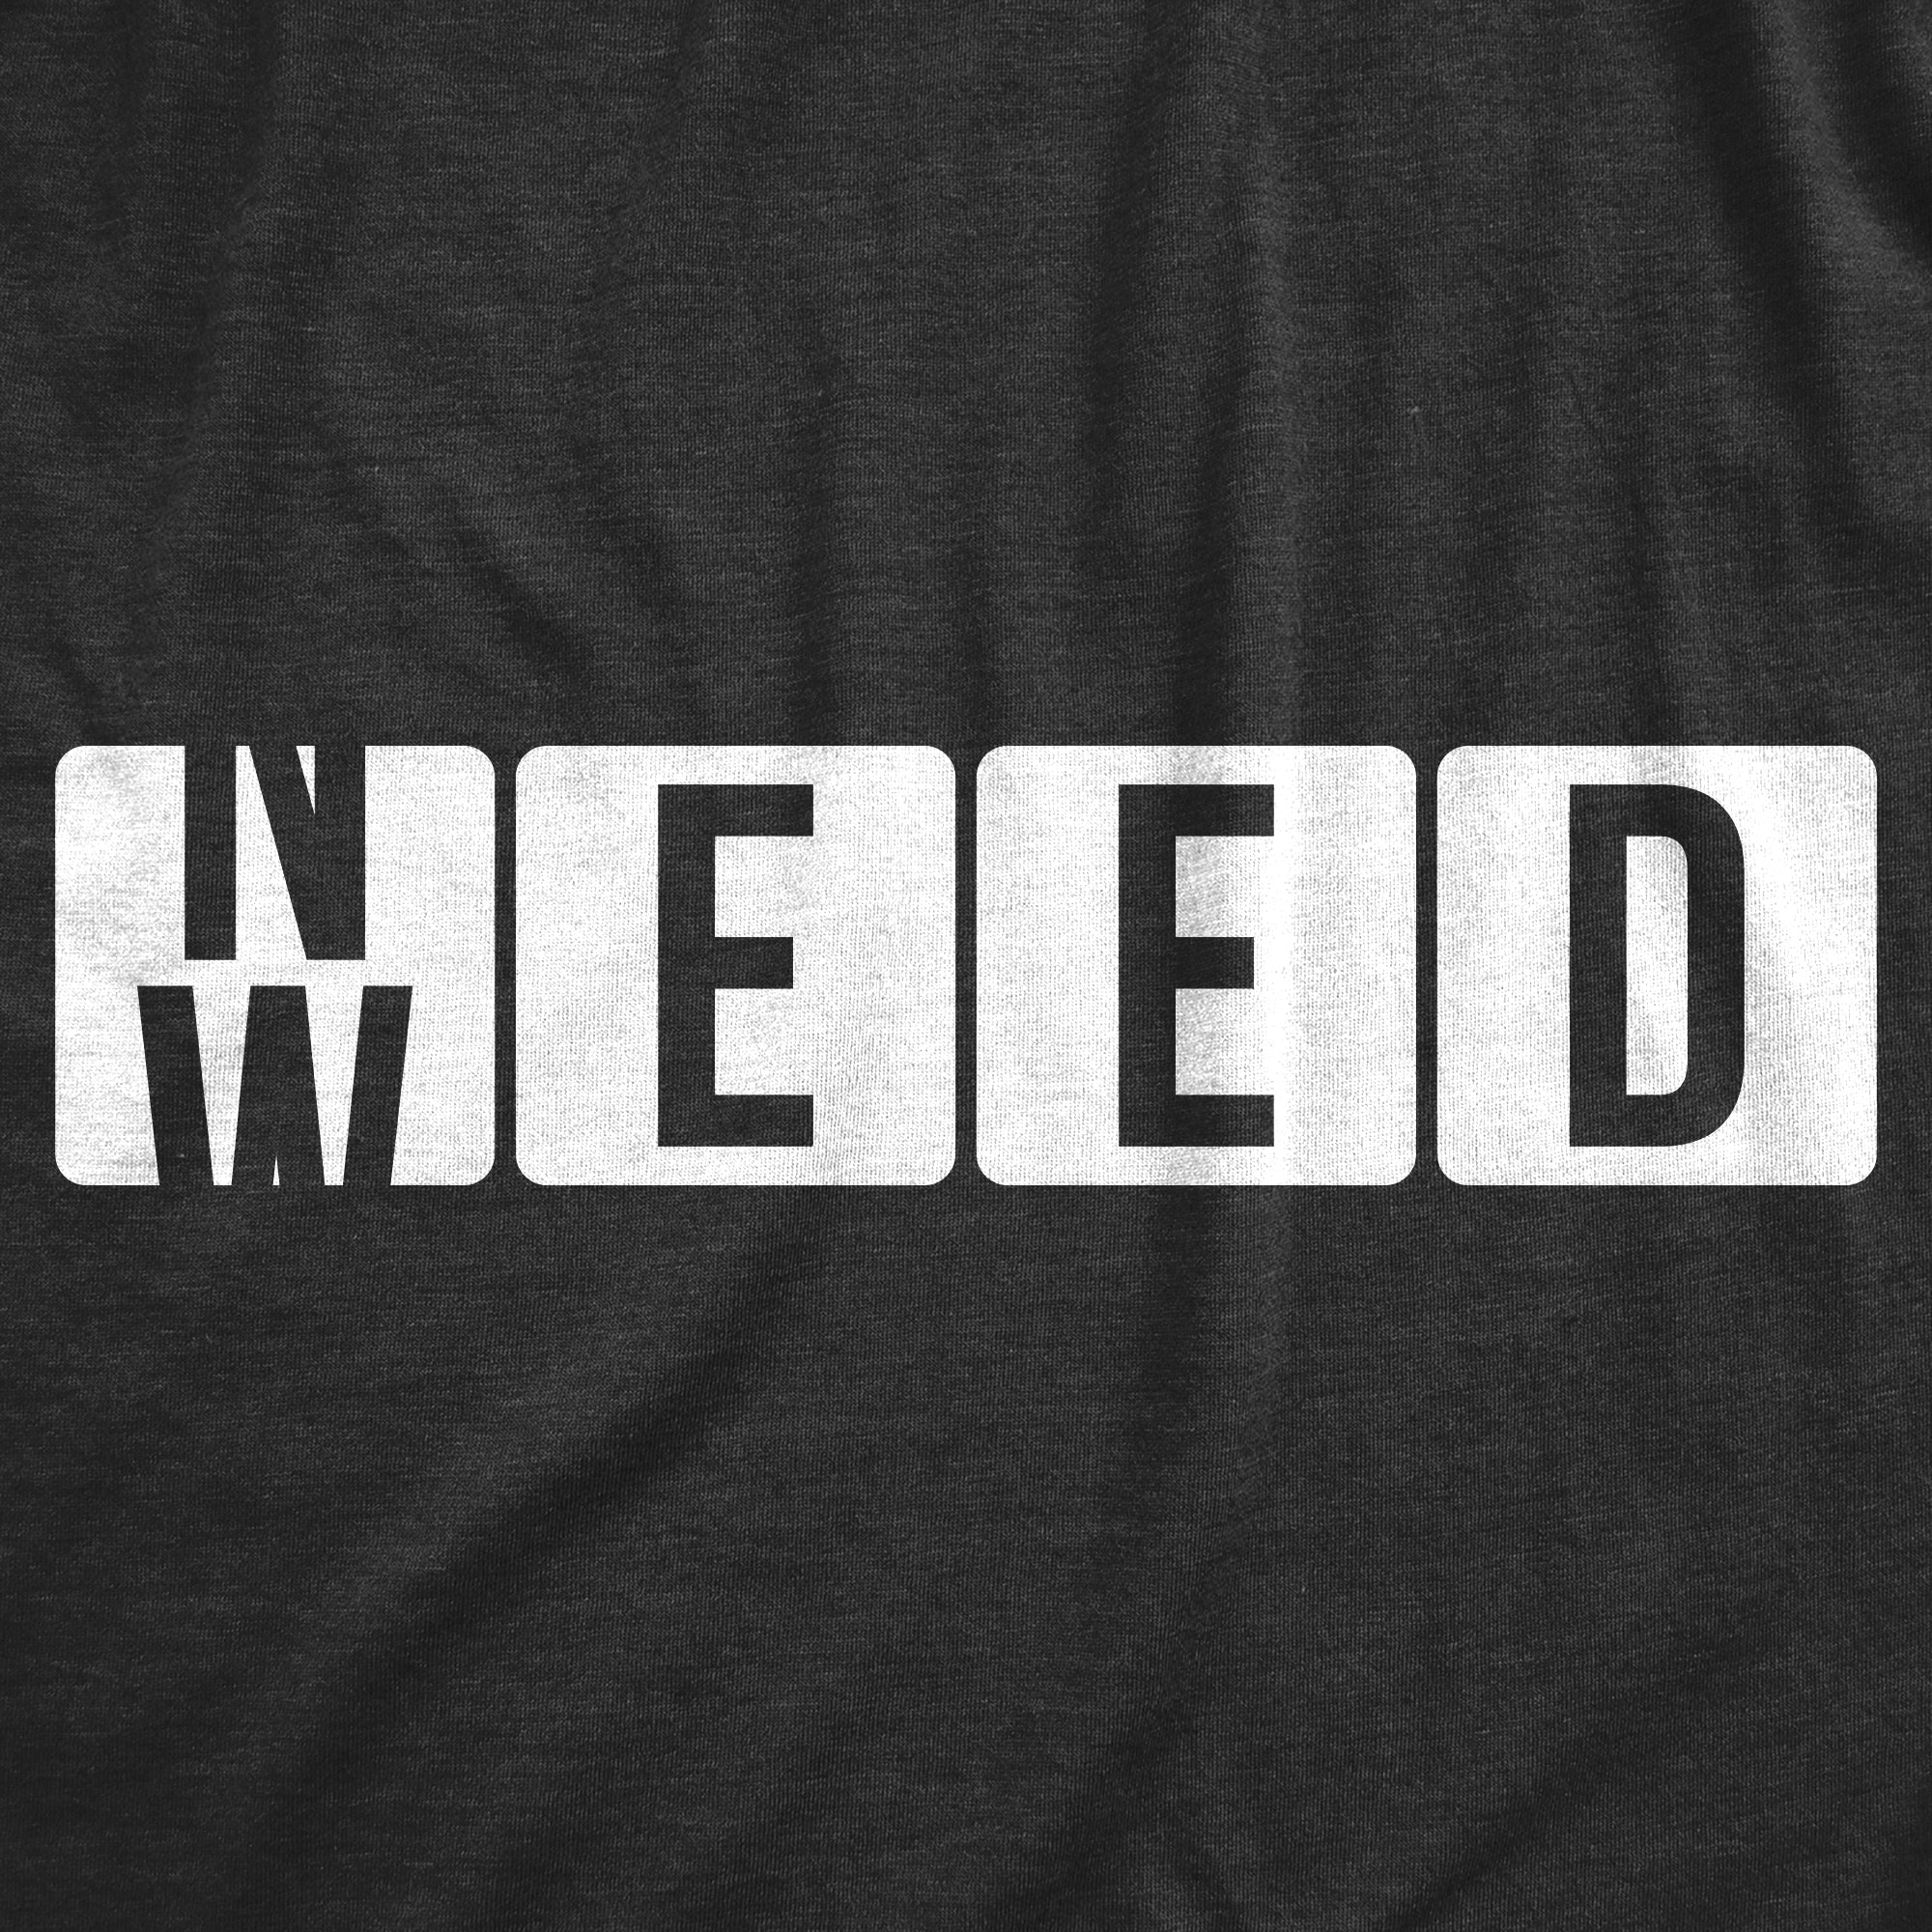 Funny Heather Black - NEEDWEED Need Weed Mens T Shirt Nerdy 420 Sarcastic Tee